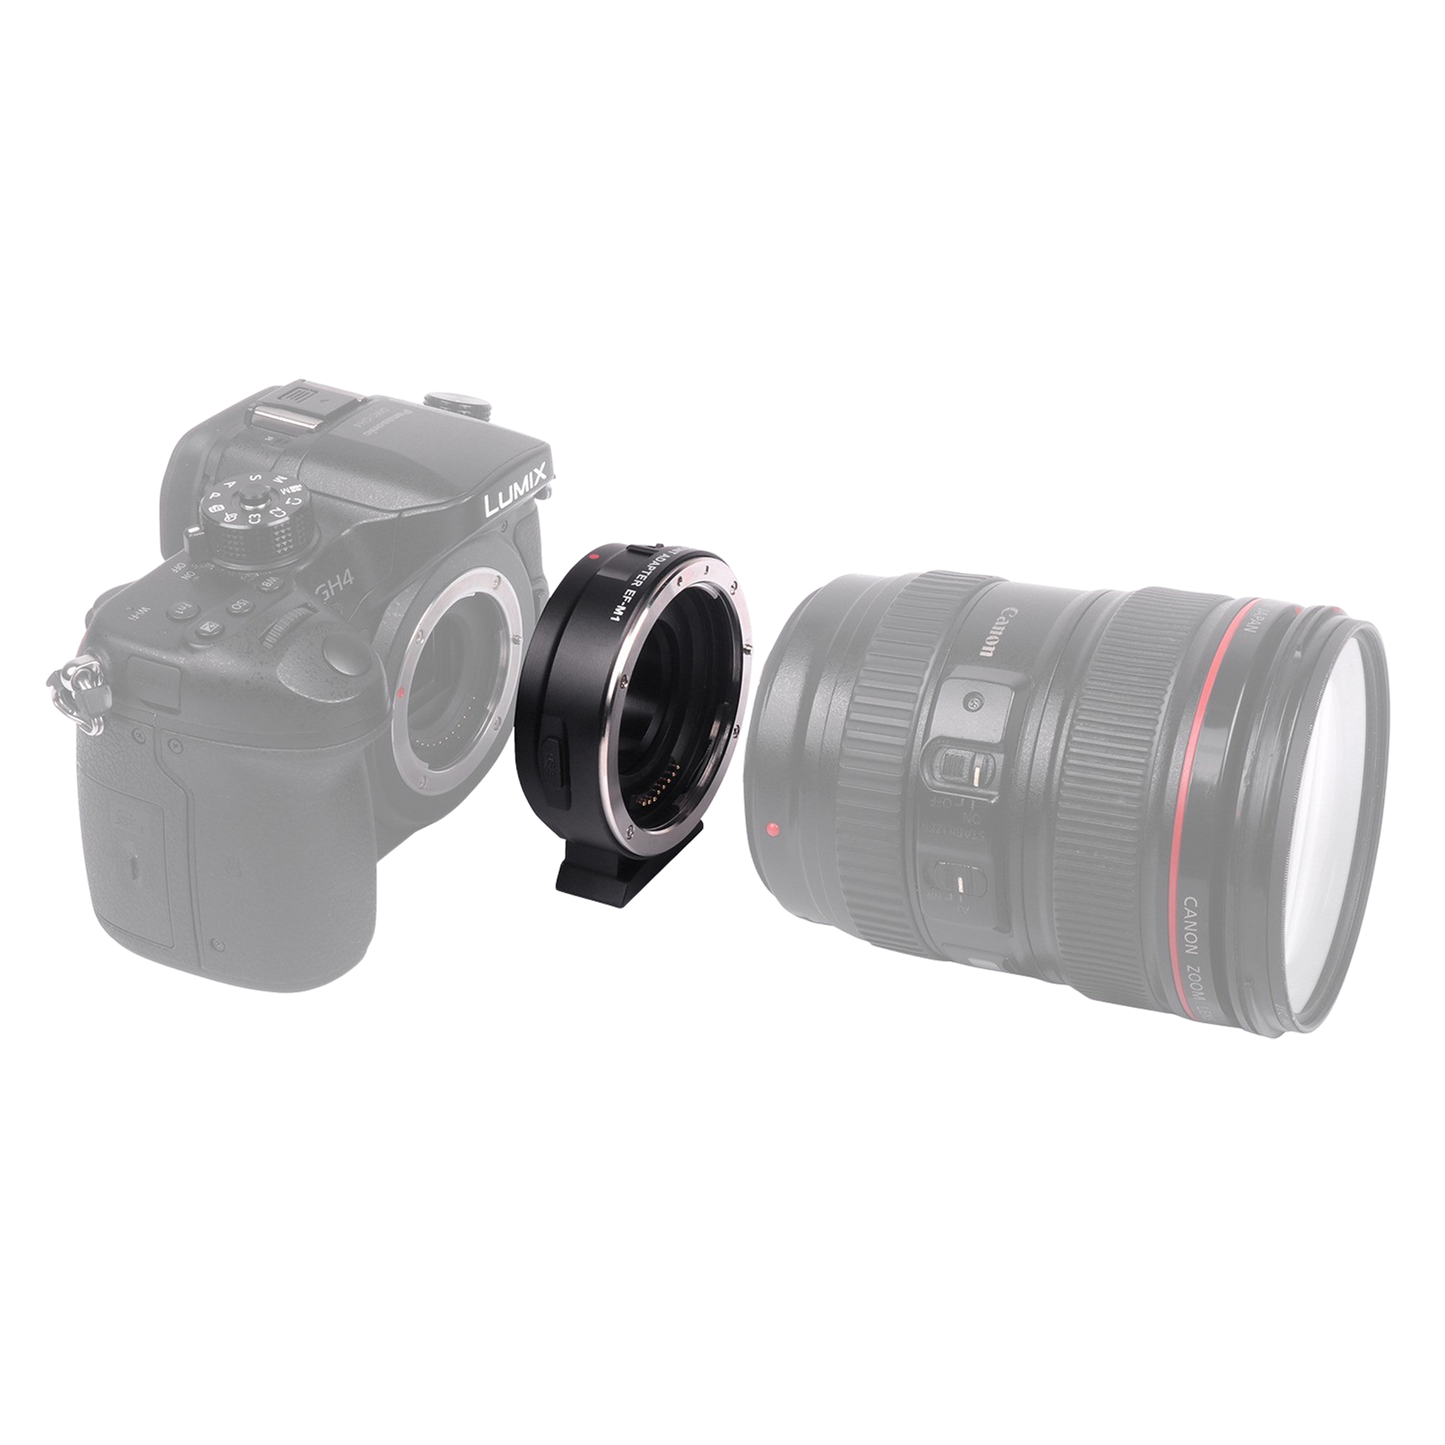 Viltrox EF-M1 adapter for Canon EF/EF-S lenses on 4/3 cameras